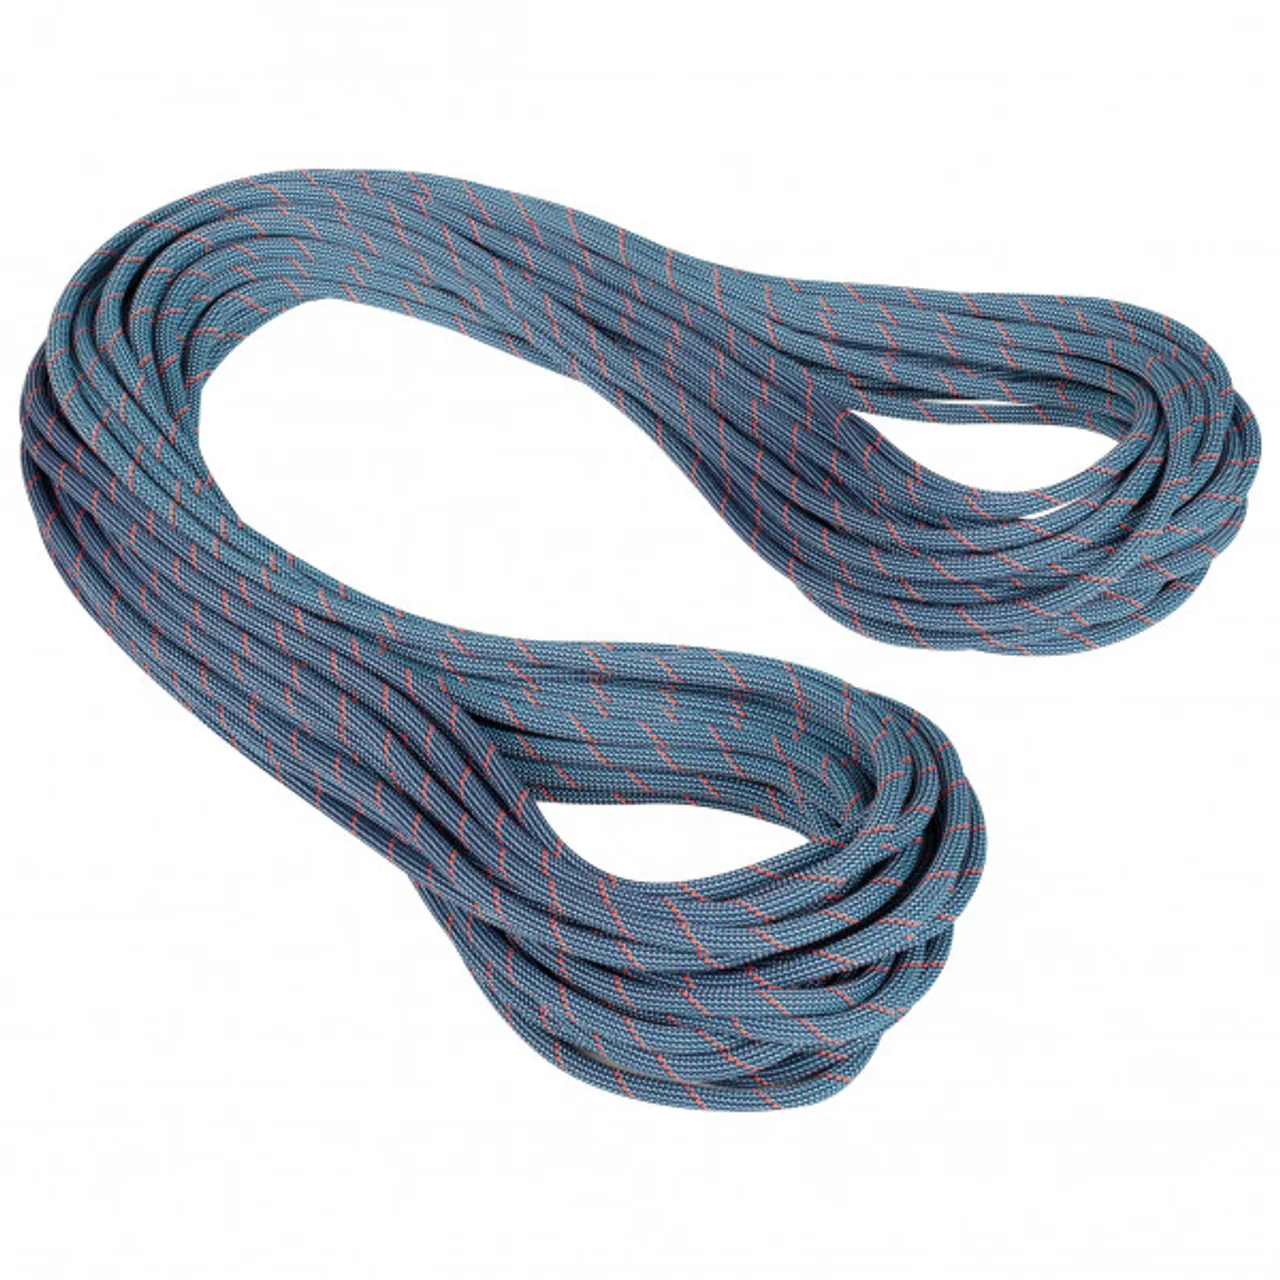 Mammut - 10.2 Crag Classic Rope - Single rope size 60 m, blue